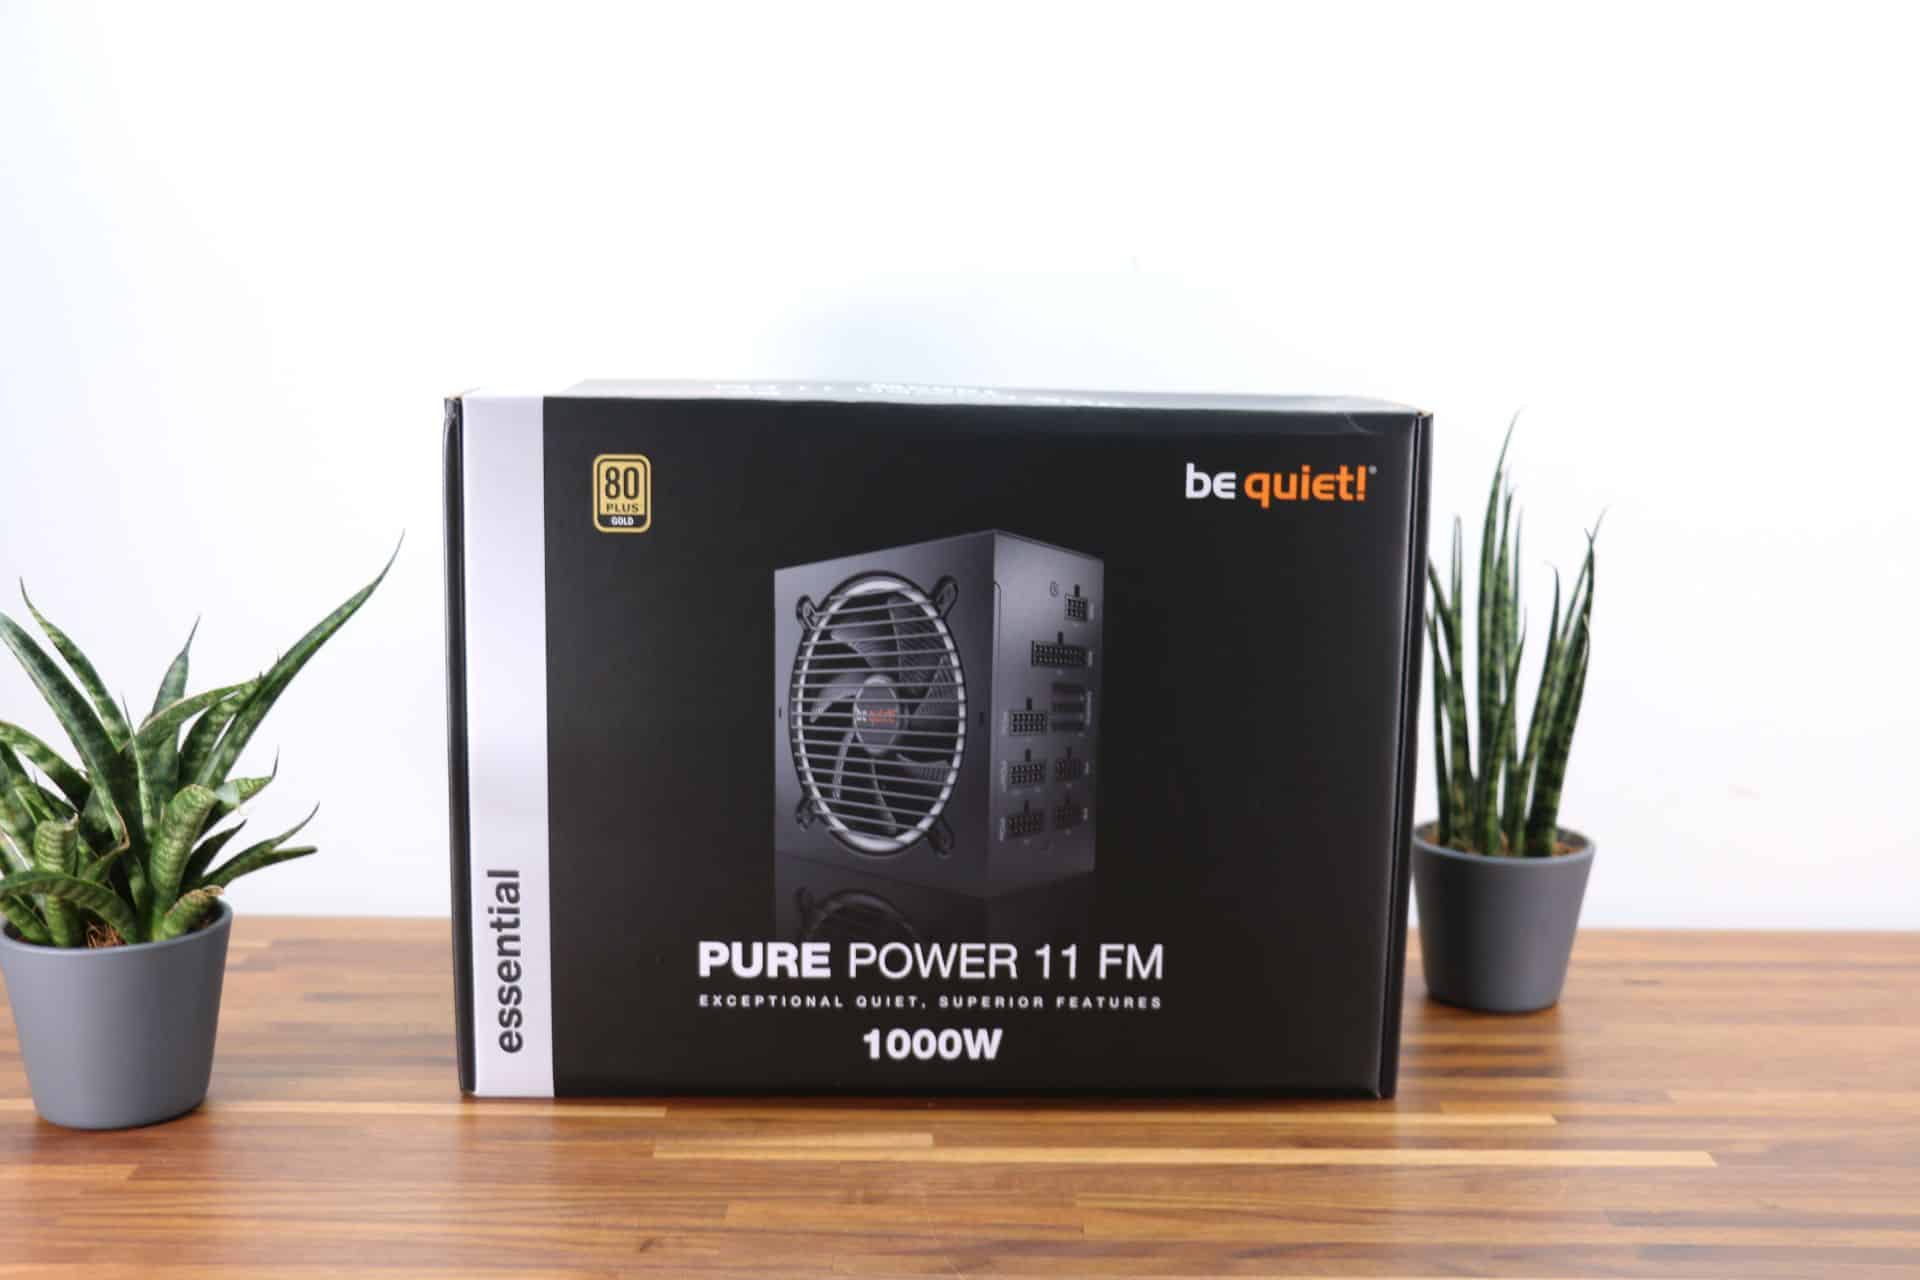 be quiet! Pure Power 11 FM 750W Power Supply Unit Review